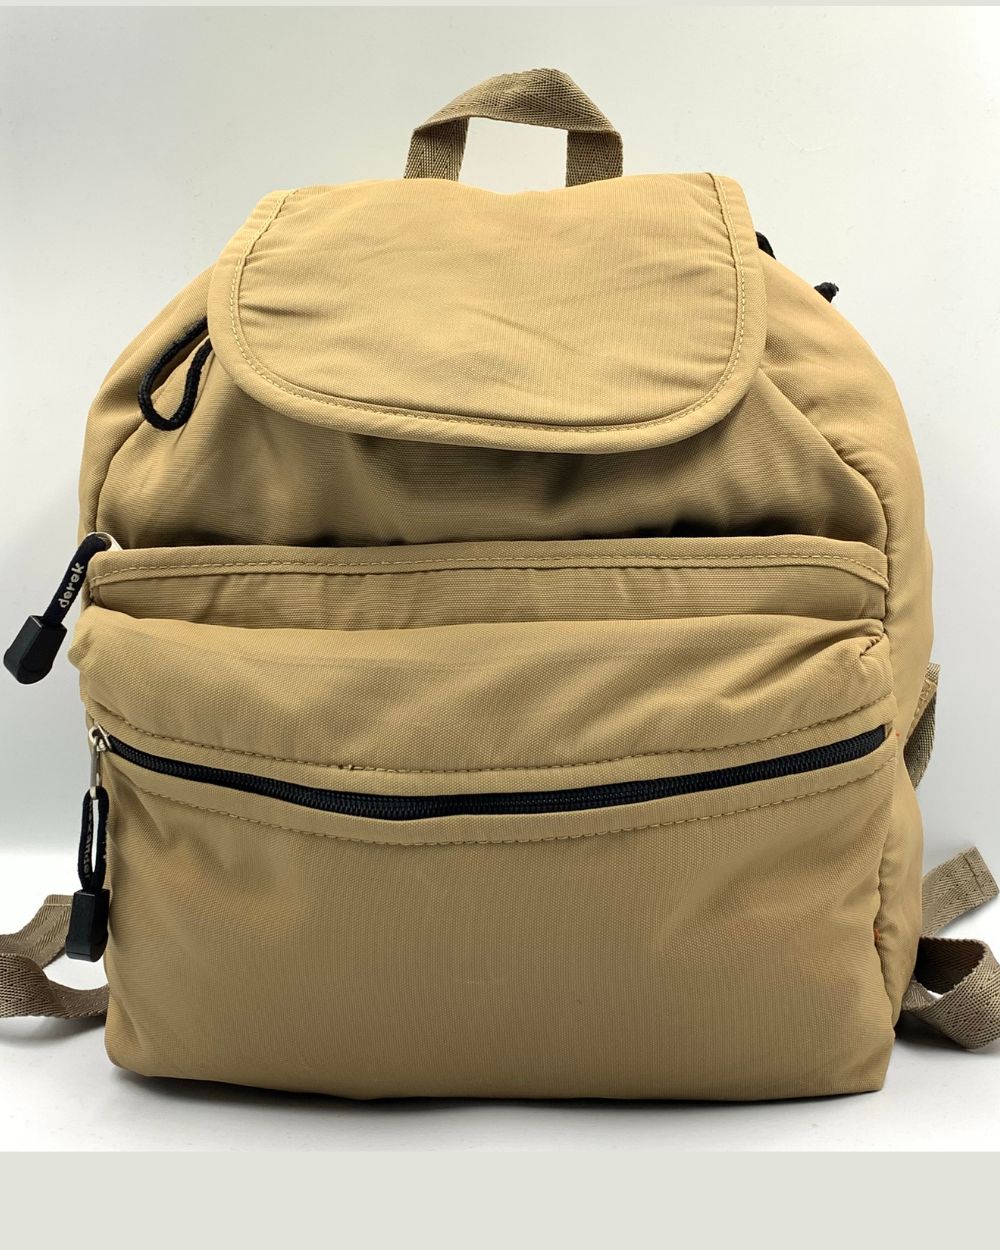 Alexander Brand Stylish For Back Pack Bag Unisex